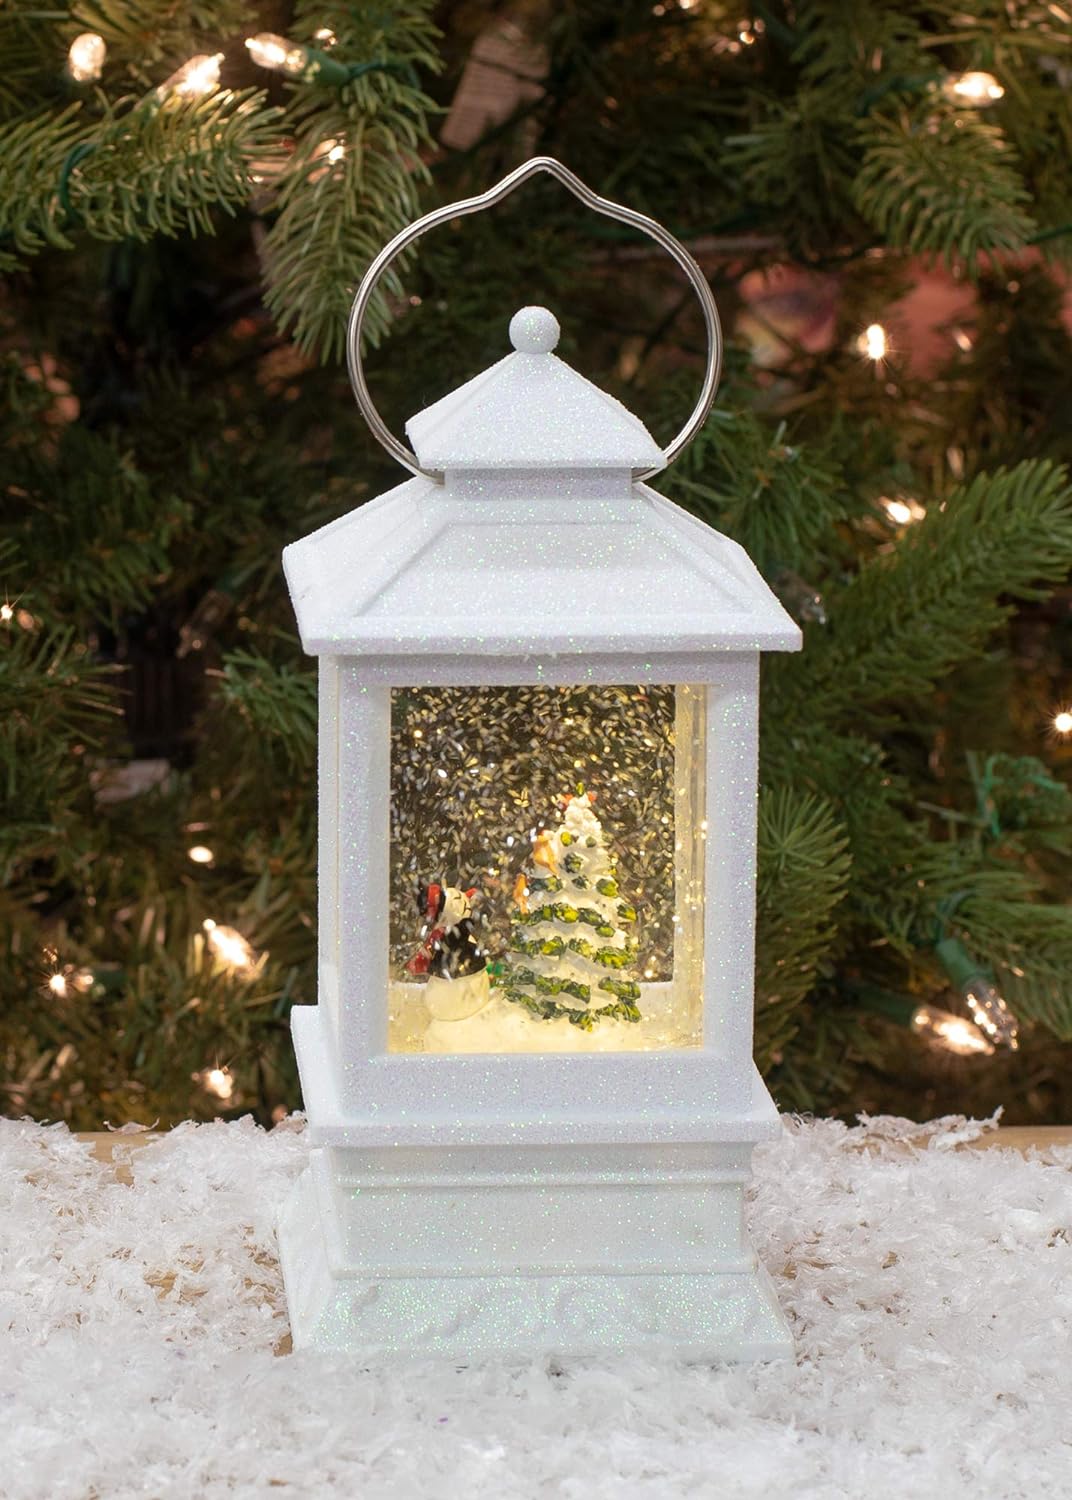 Musical Snow Globe Lantern with Snowman, White Lantern